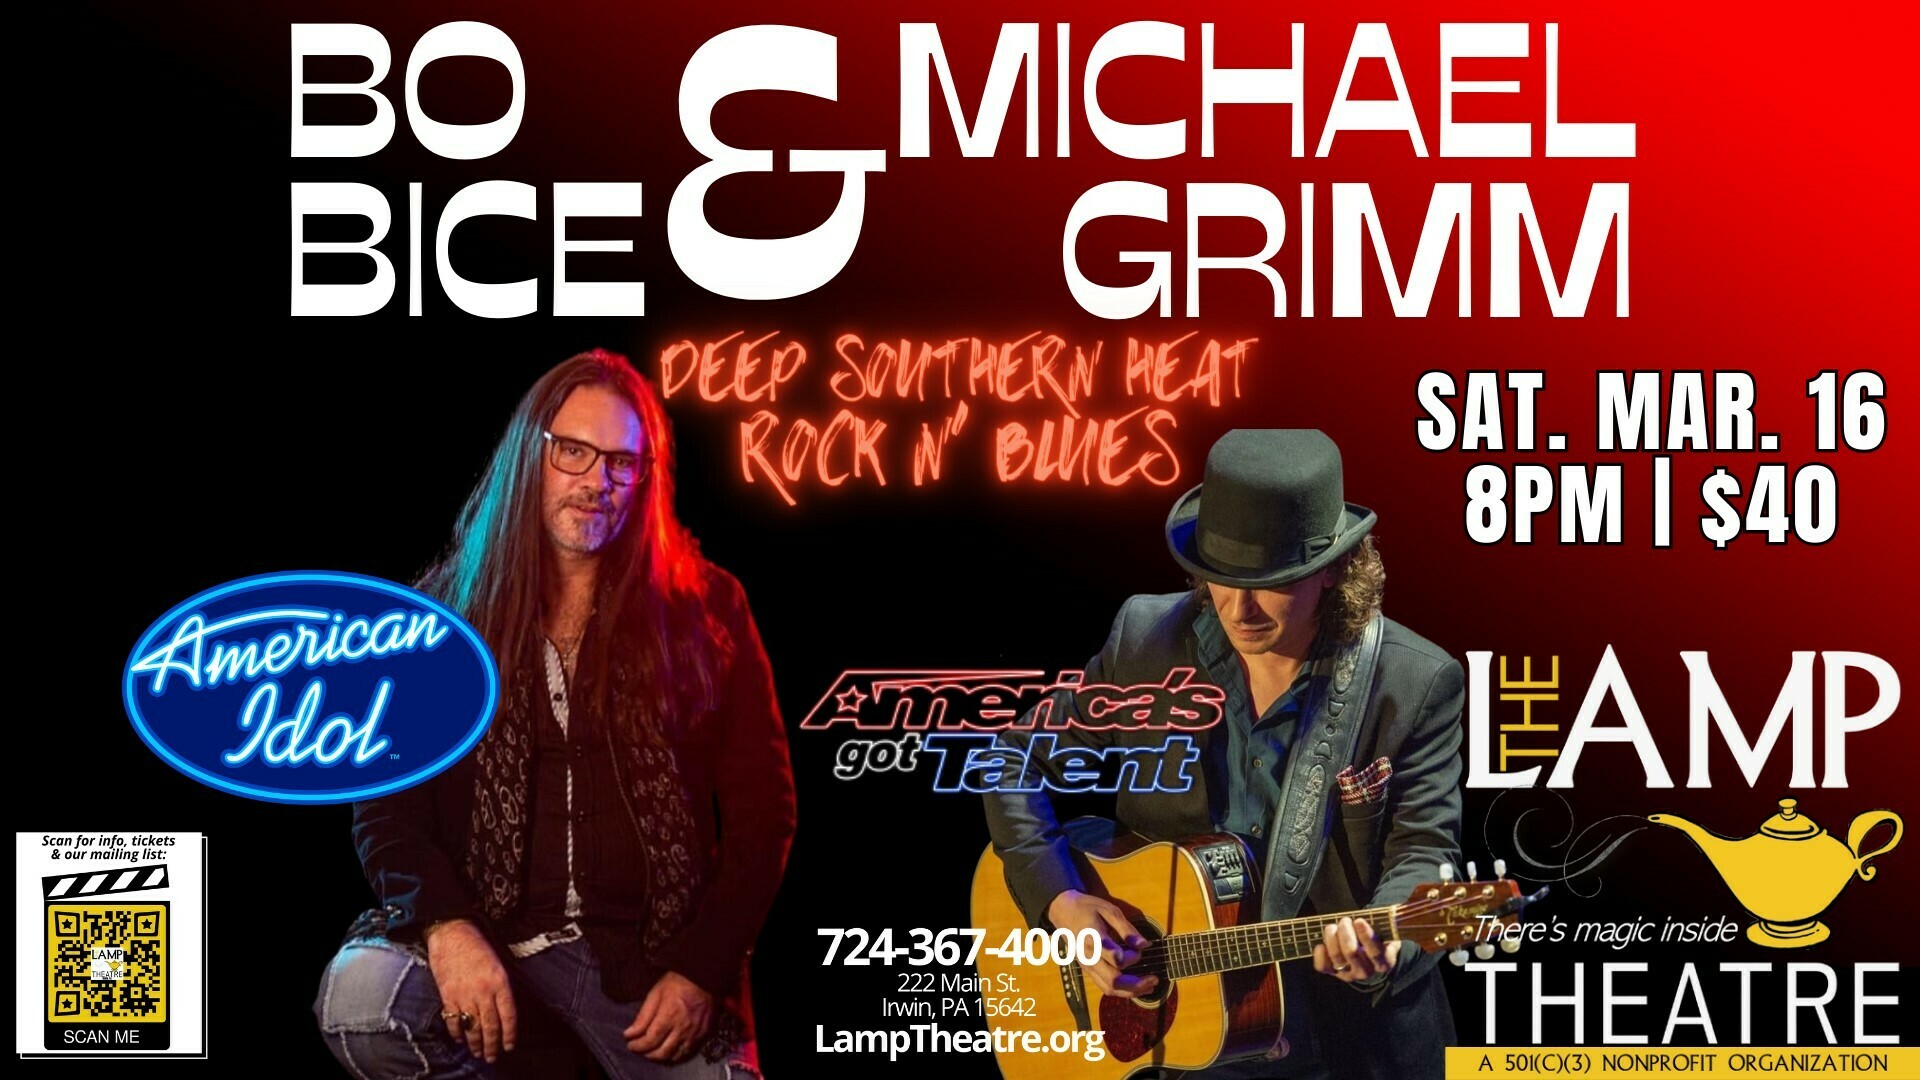 Bo Bice and Michael Grimm: Deep Southern Heat Rock N' Blues, Irwin, Pennsylvania, United States